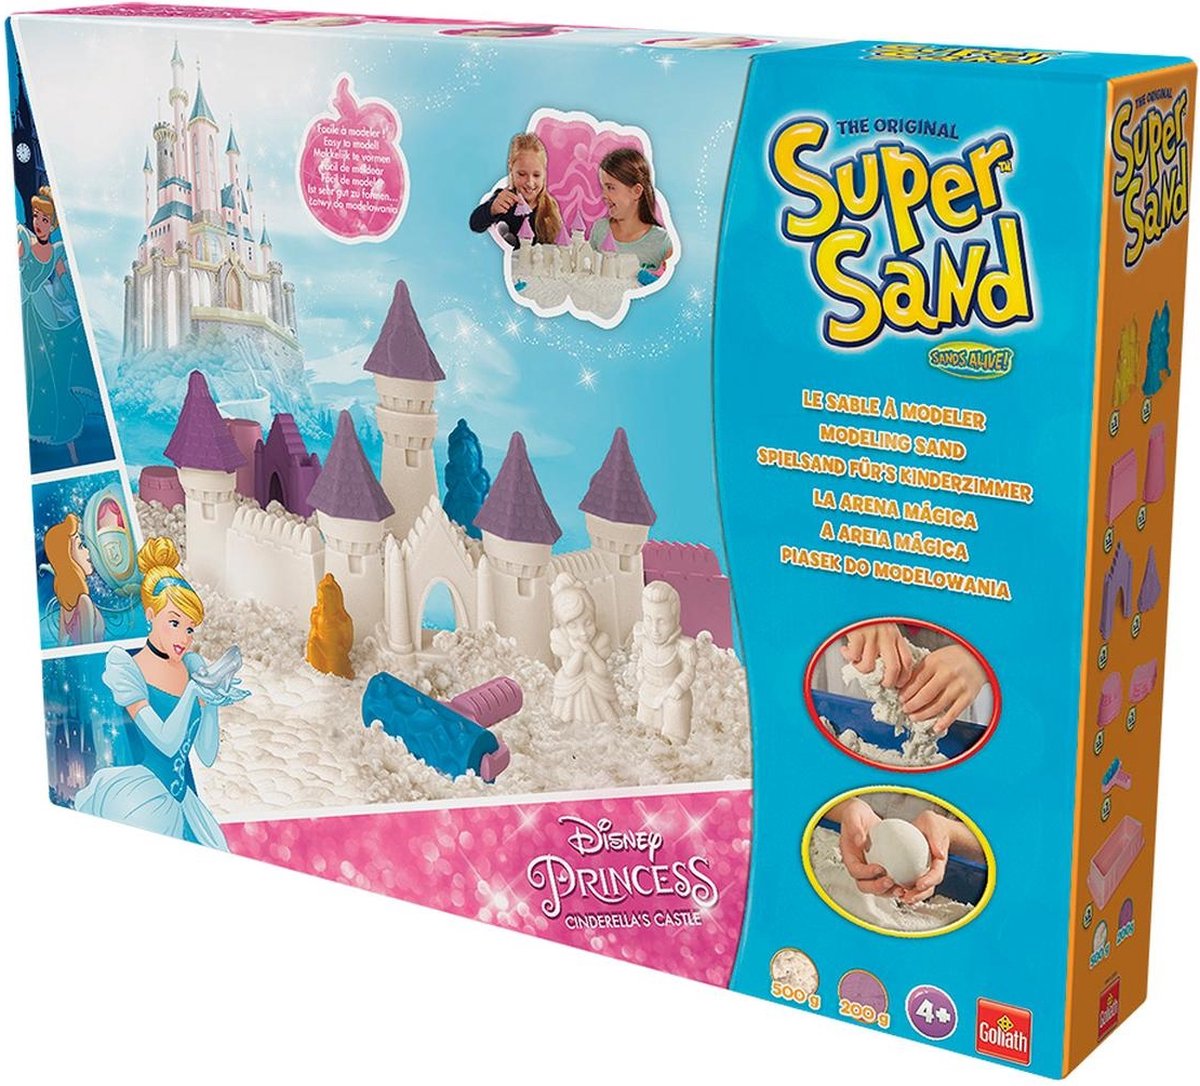 Super Sand Disney Princess Cinderella's Castle - Speelzand Assepoester speelset